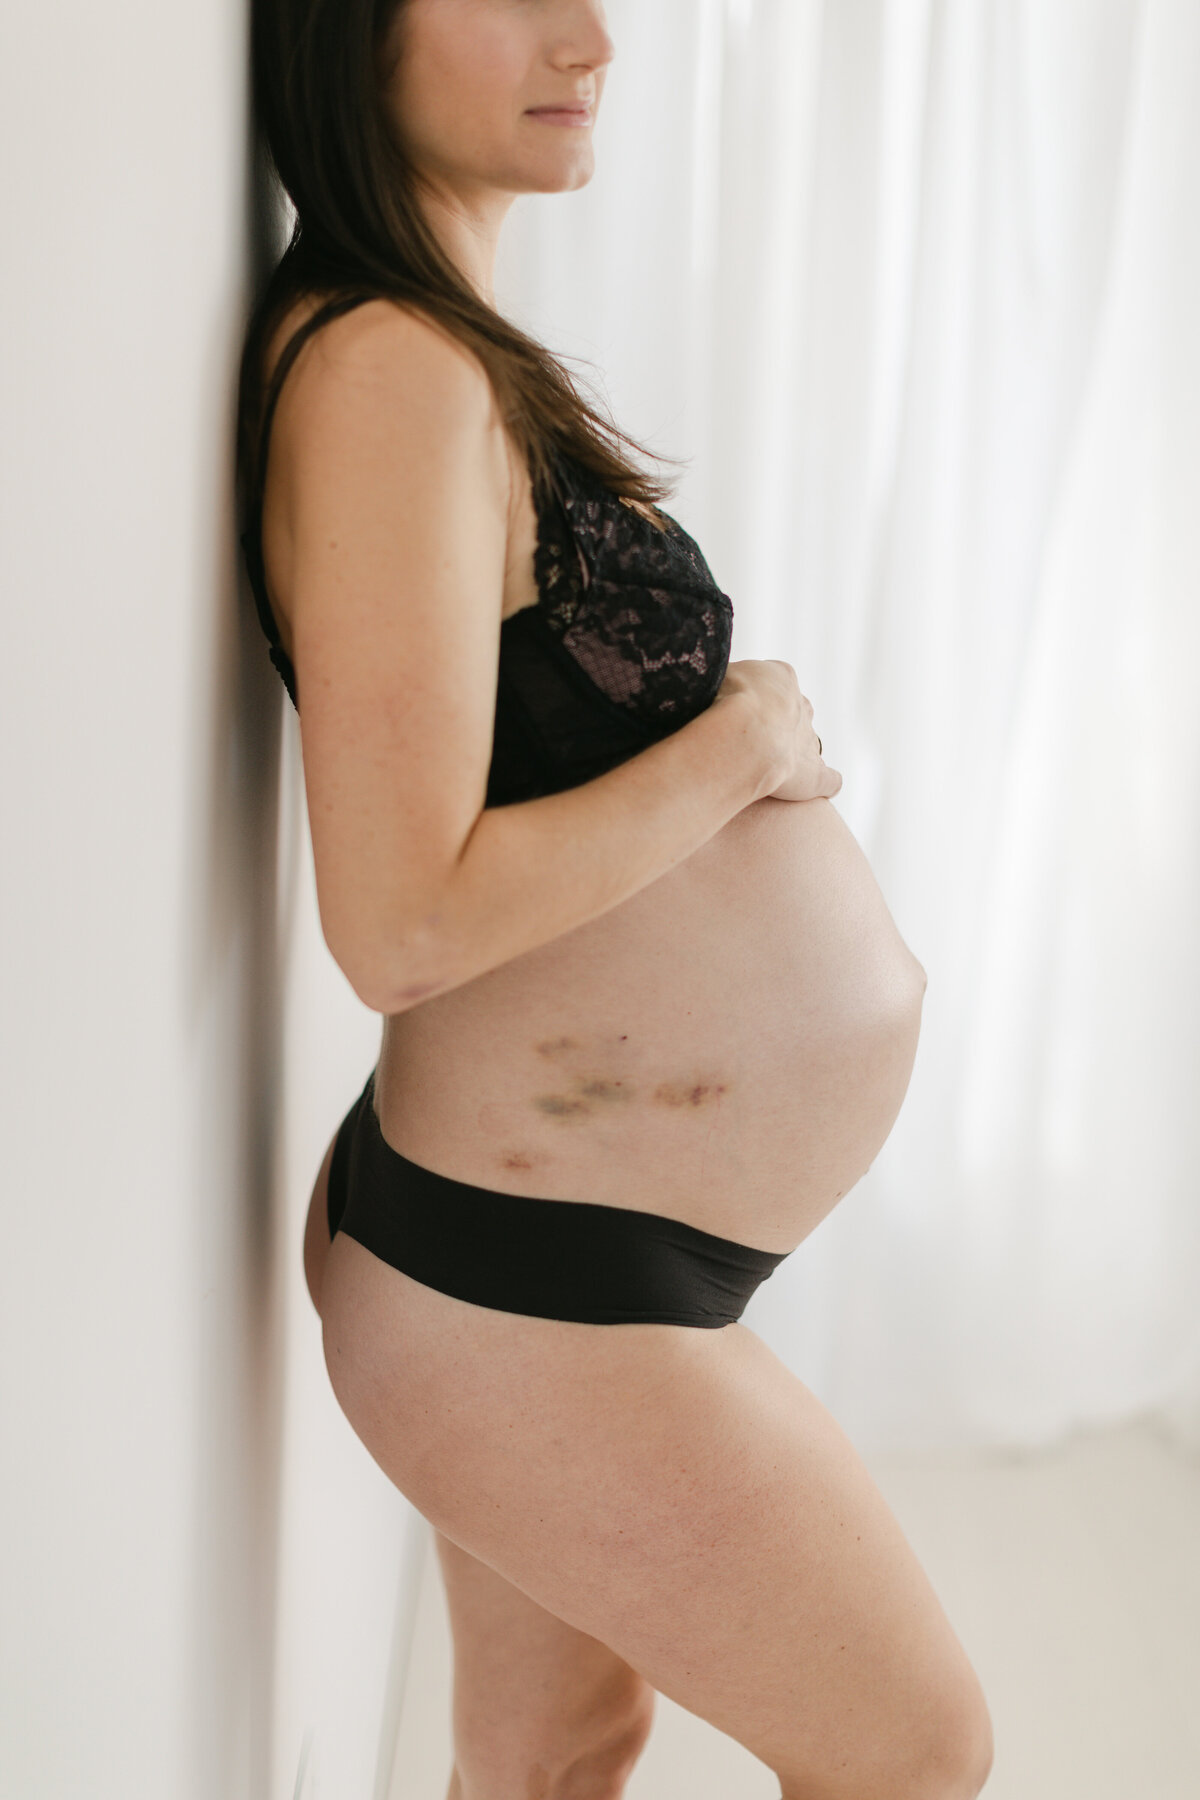 IVF maternity photo session Chicago IL